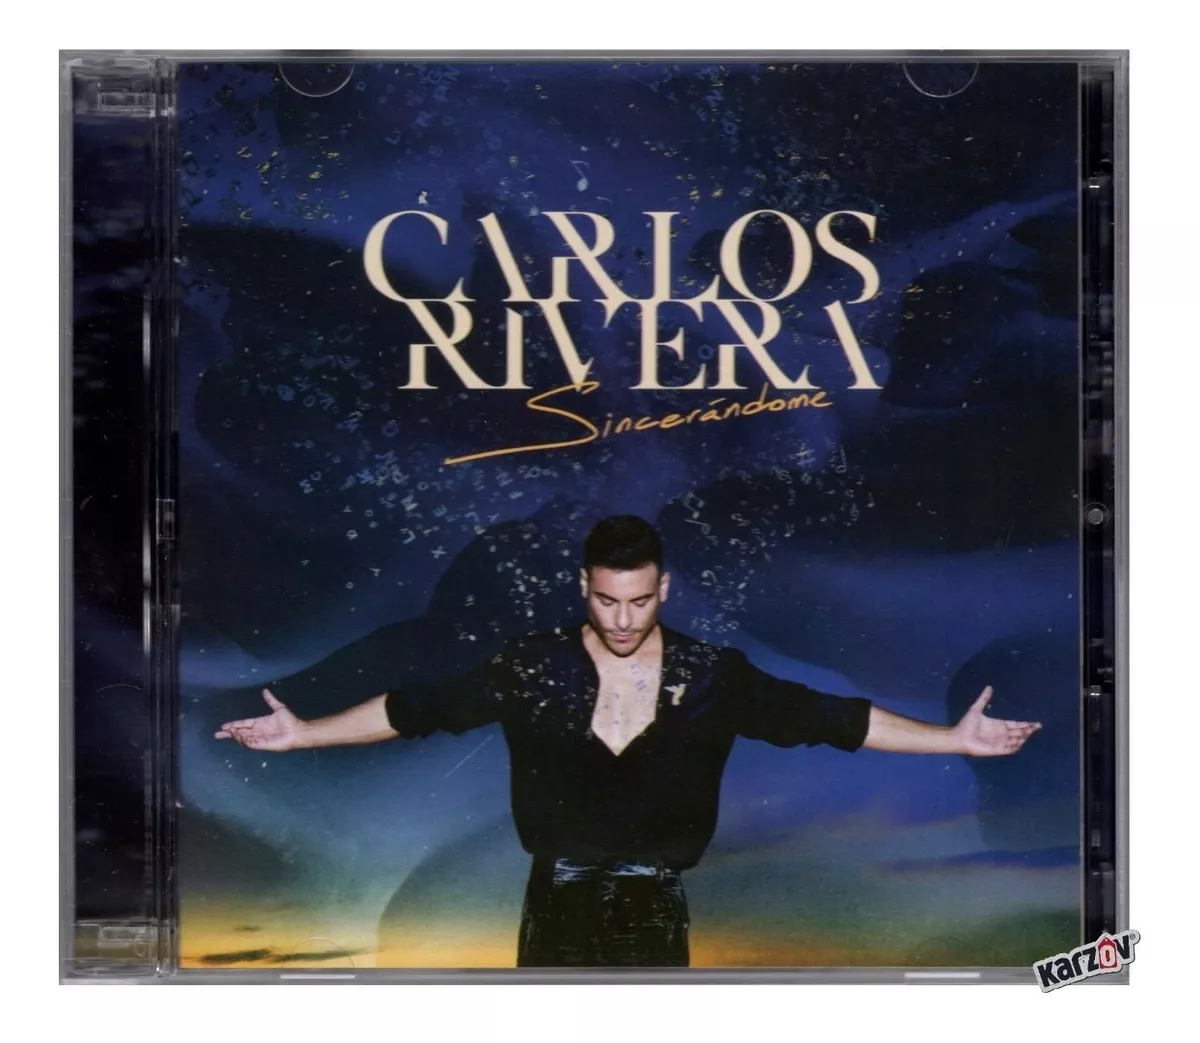 Carlos Rivera Sincerandome / Disco Cd + Dvd